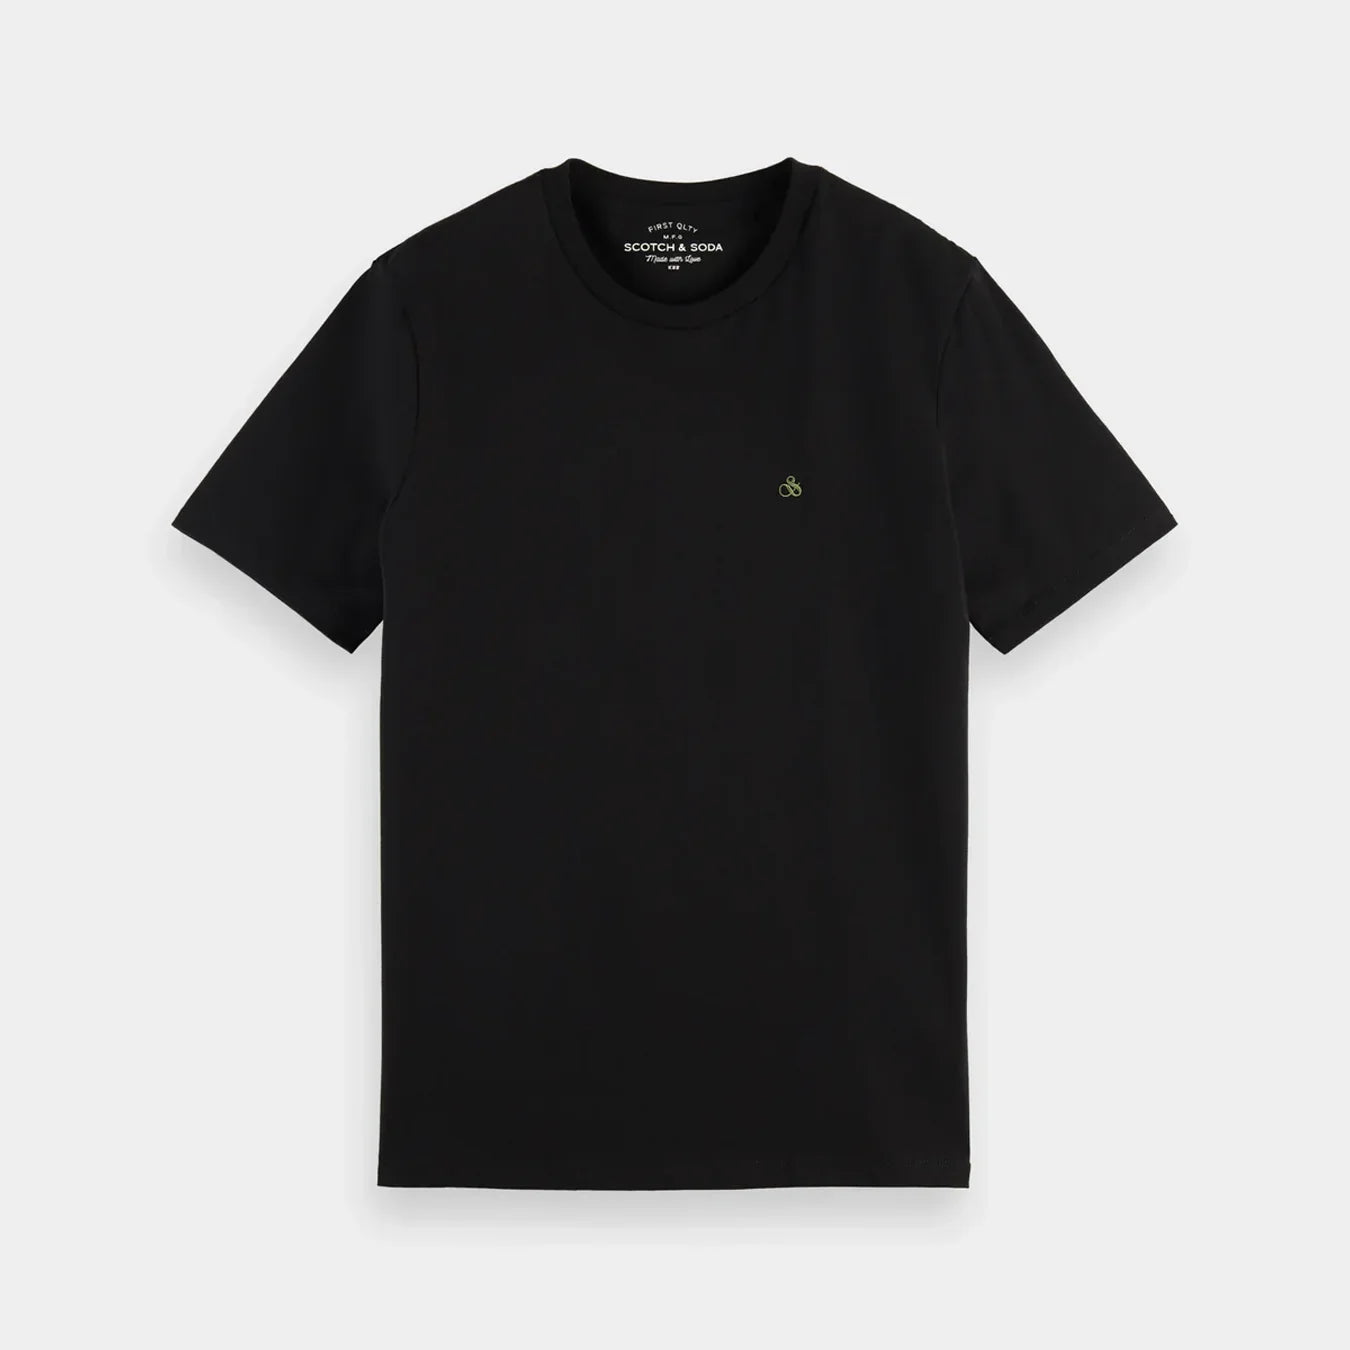 'Scotch & Soda Crewneck Jersey T-Shirt In Organic Cotton' in 'Black' colour